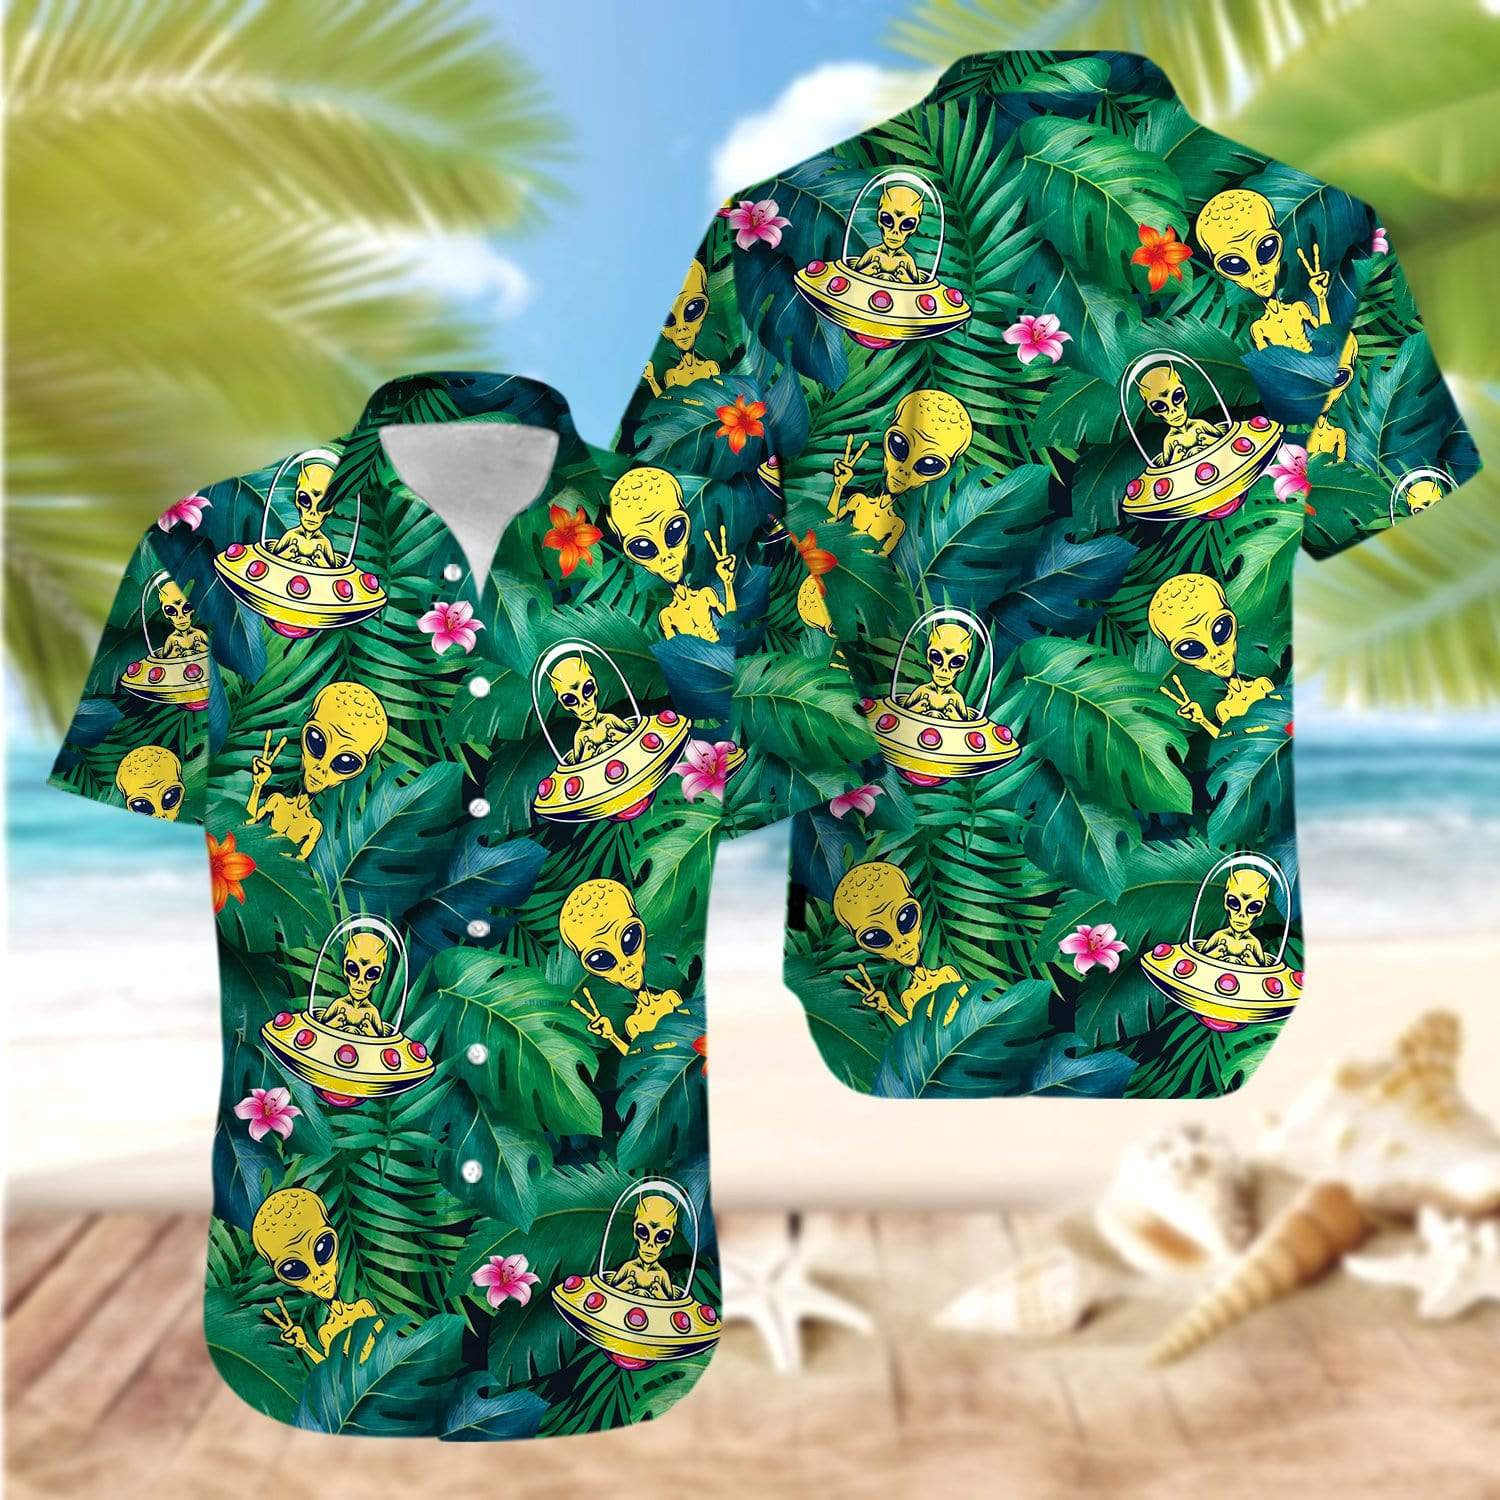 kurobase-alien-ufo-hippie-tropical-hawaiian-shirts-v.jpg